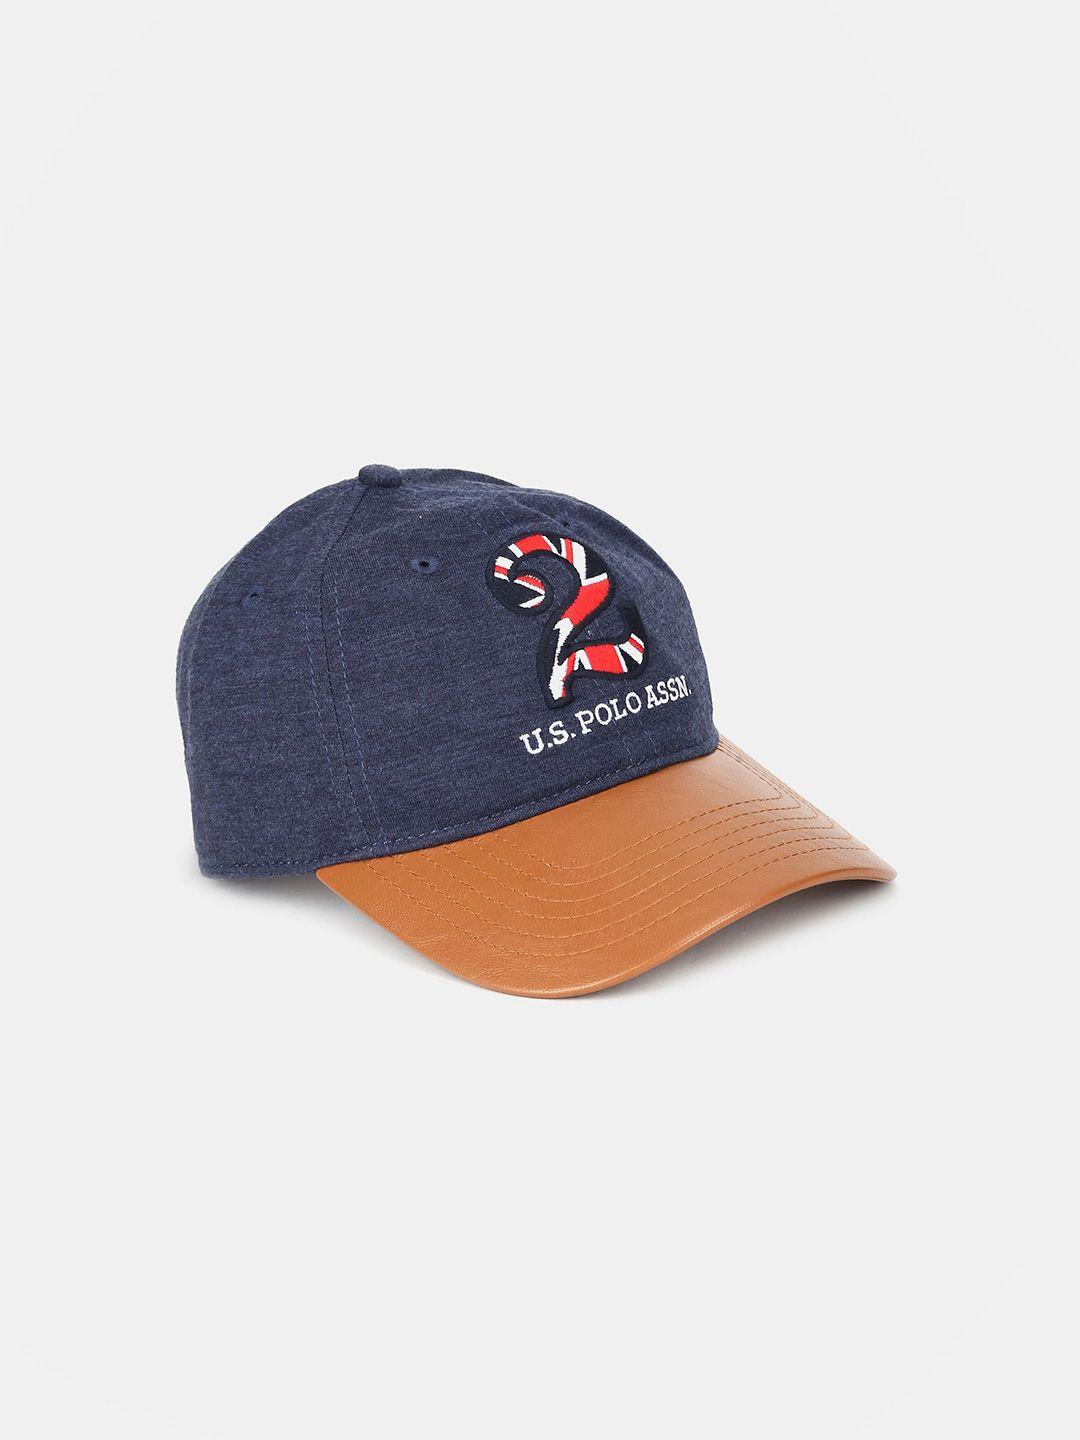 u-s-polo-assn-men-blue-&-orange-printed-baseball-cap